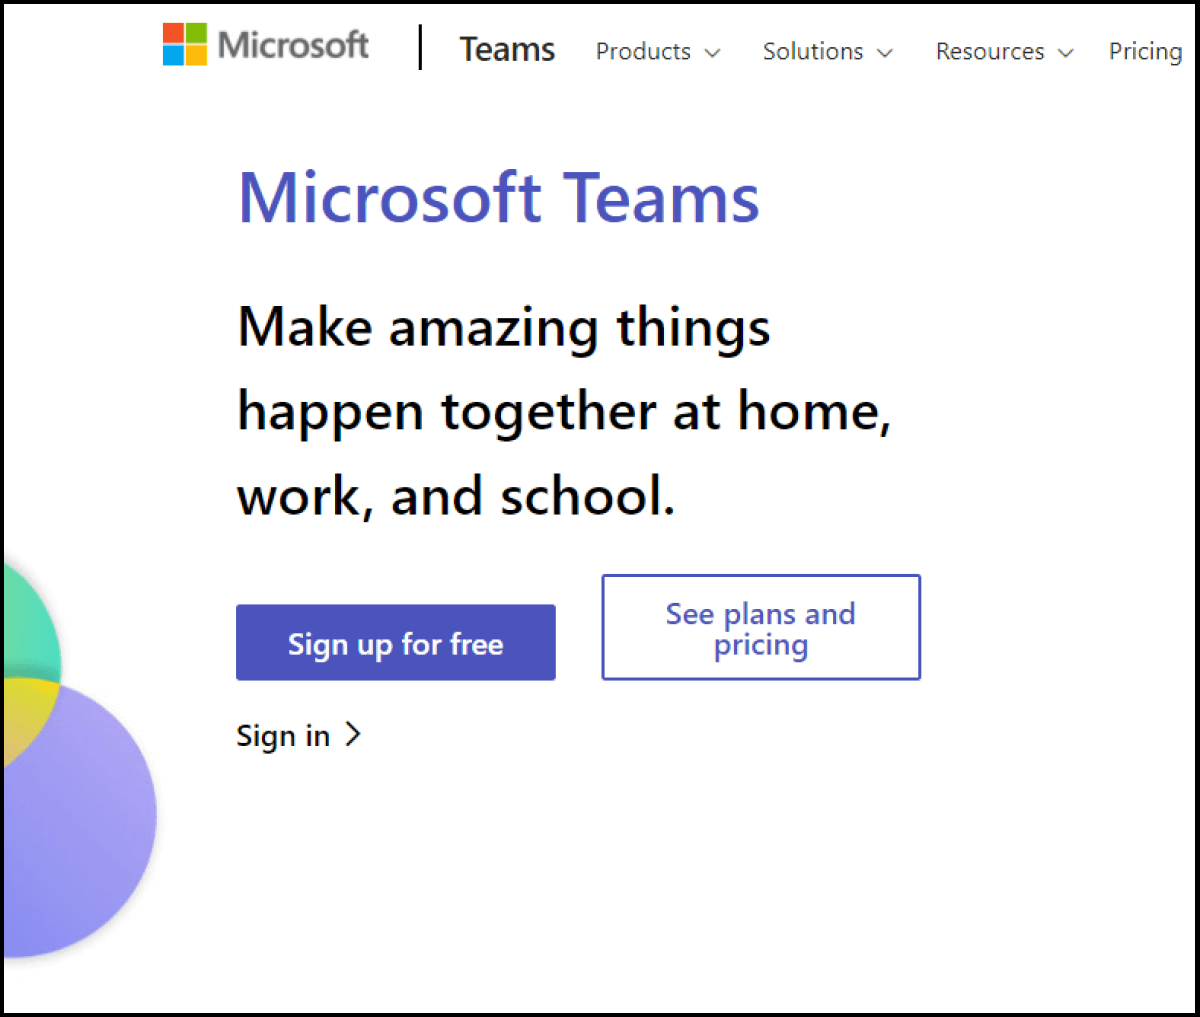 Microsoft’s website for downloading Microsoft Teams